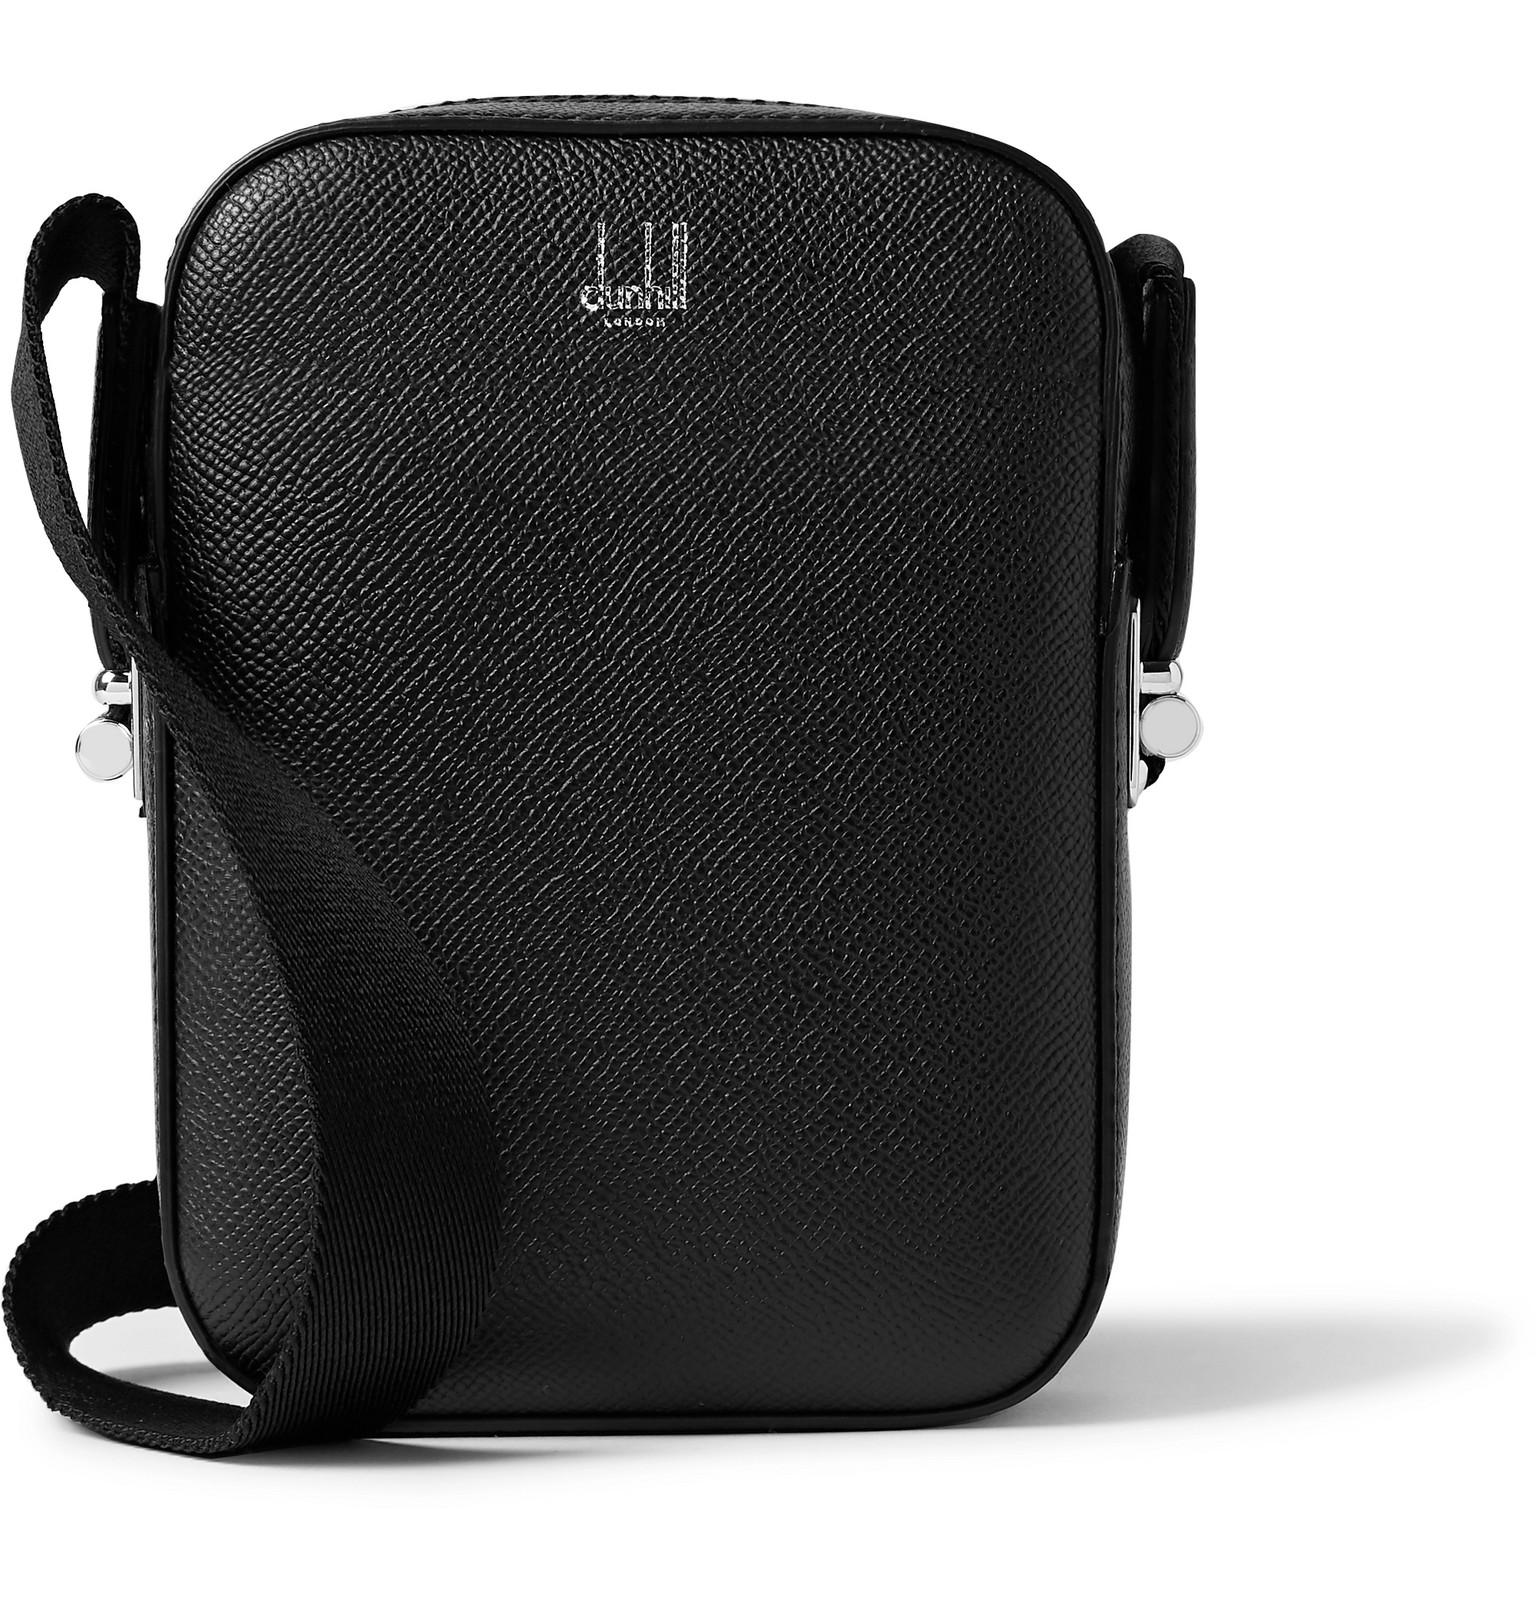 Dunhill Cadogan Pebble-grain Leather Messenger Bag in Black for Men - Lyst